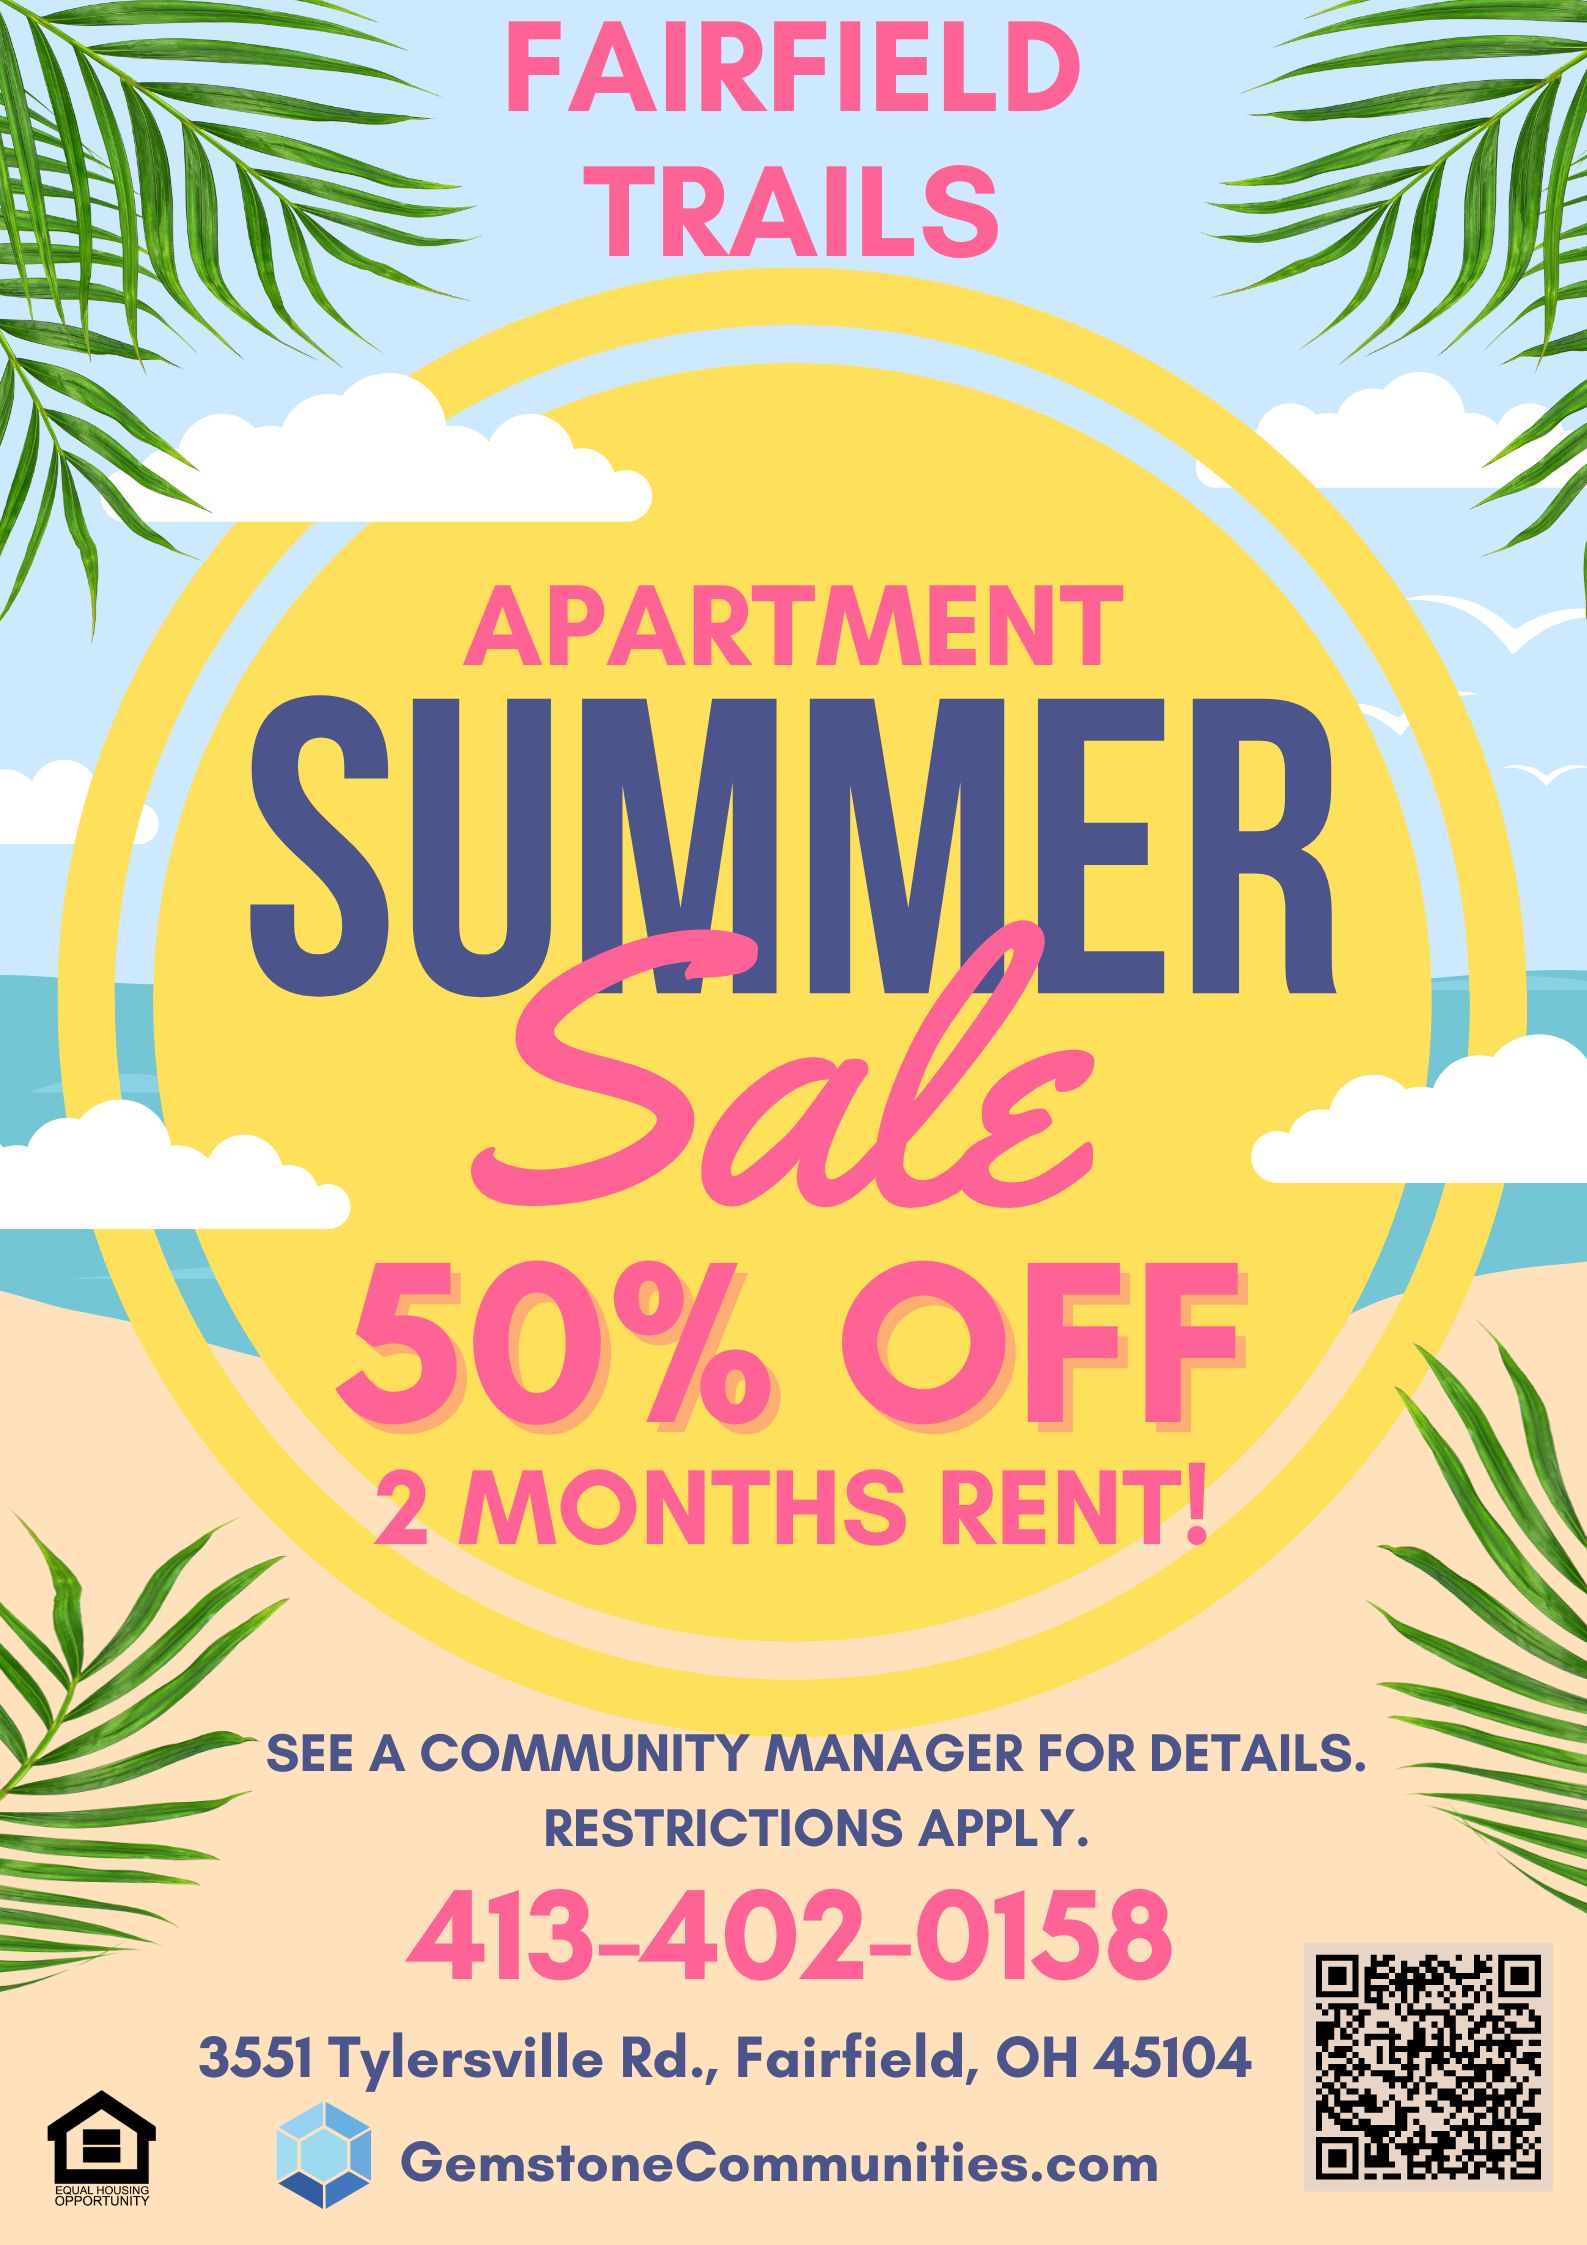 Fairfield Trails - Fairfield Apartment Summer Sale